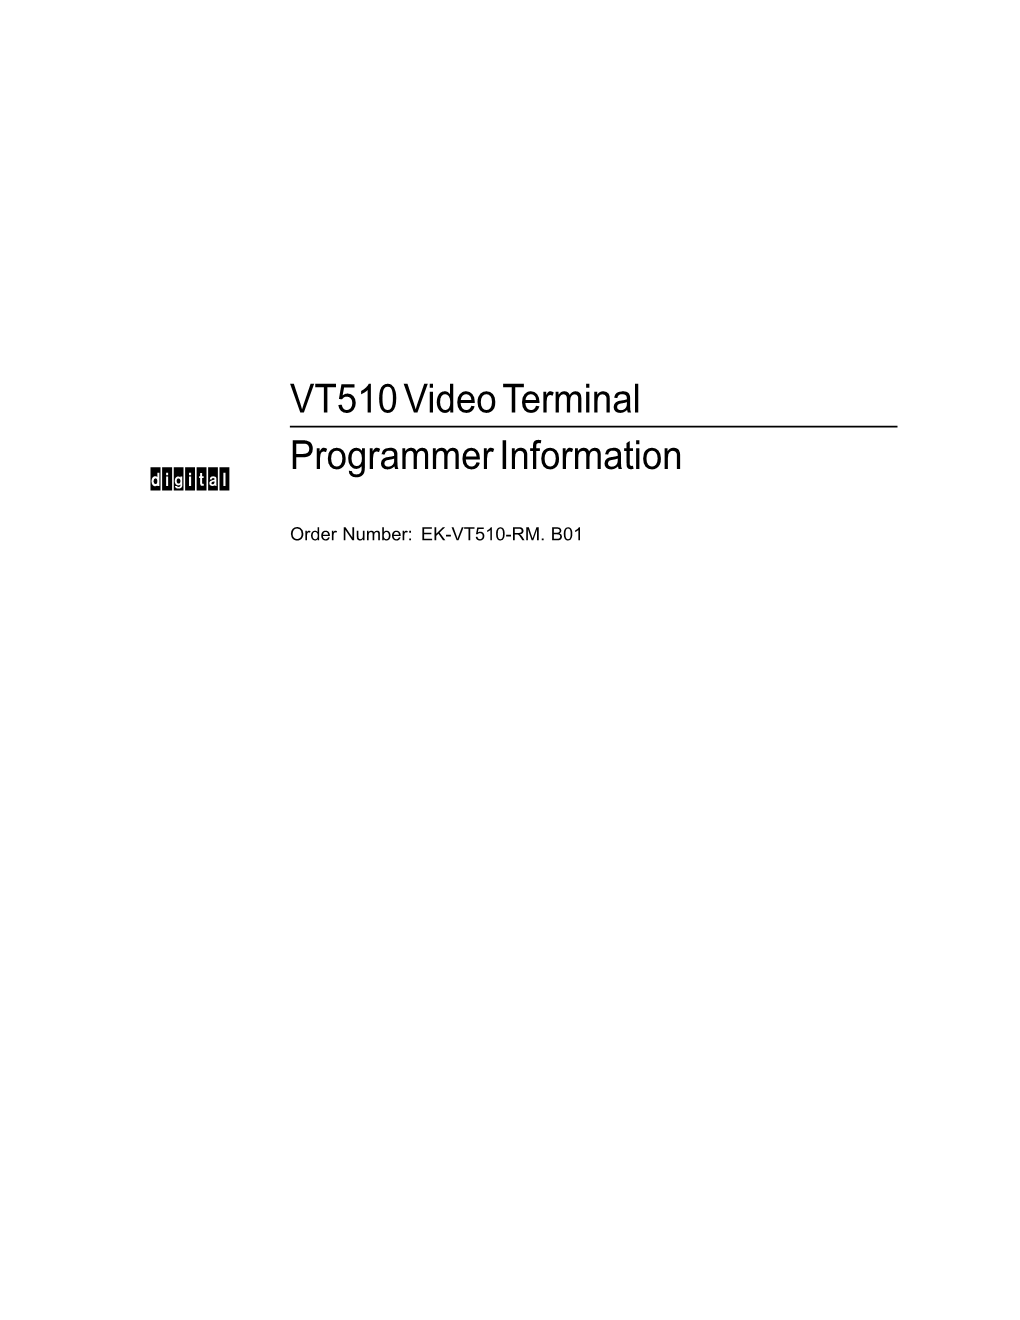 VT510 Video Terminal Programmers Information